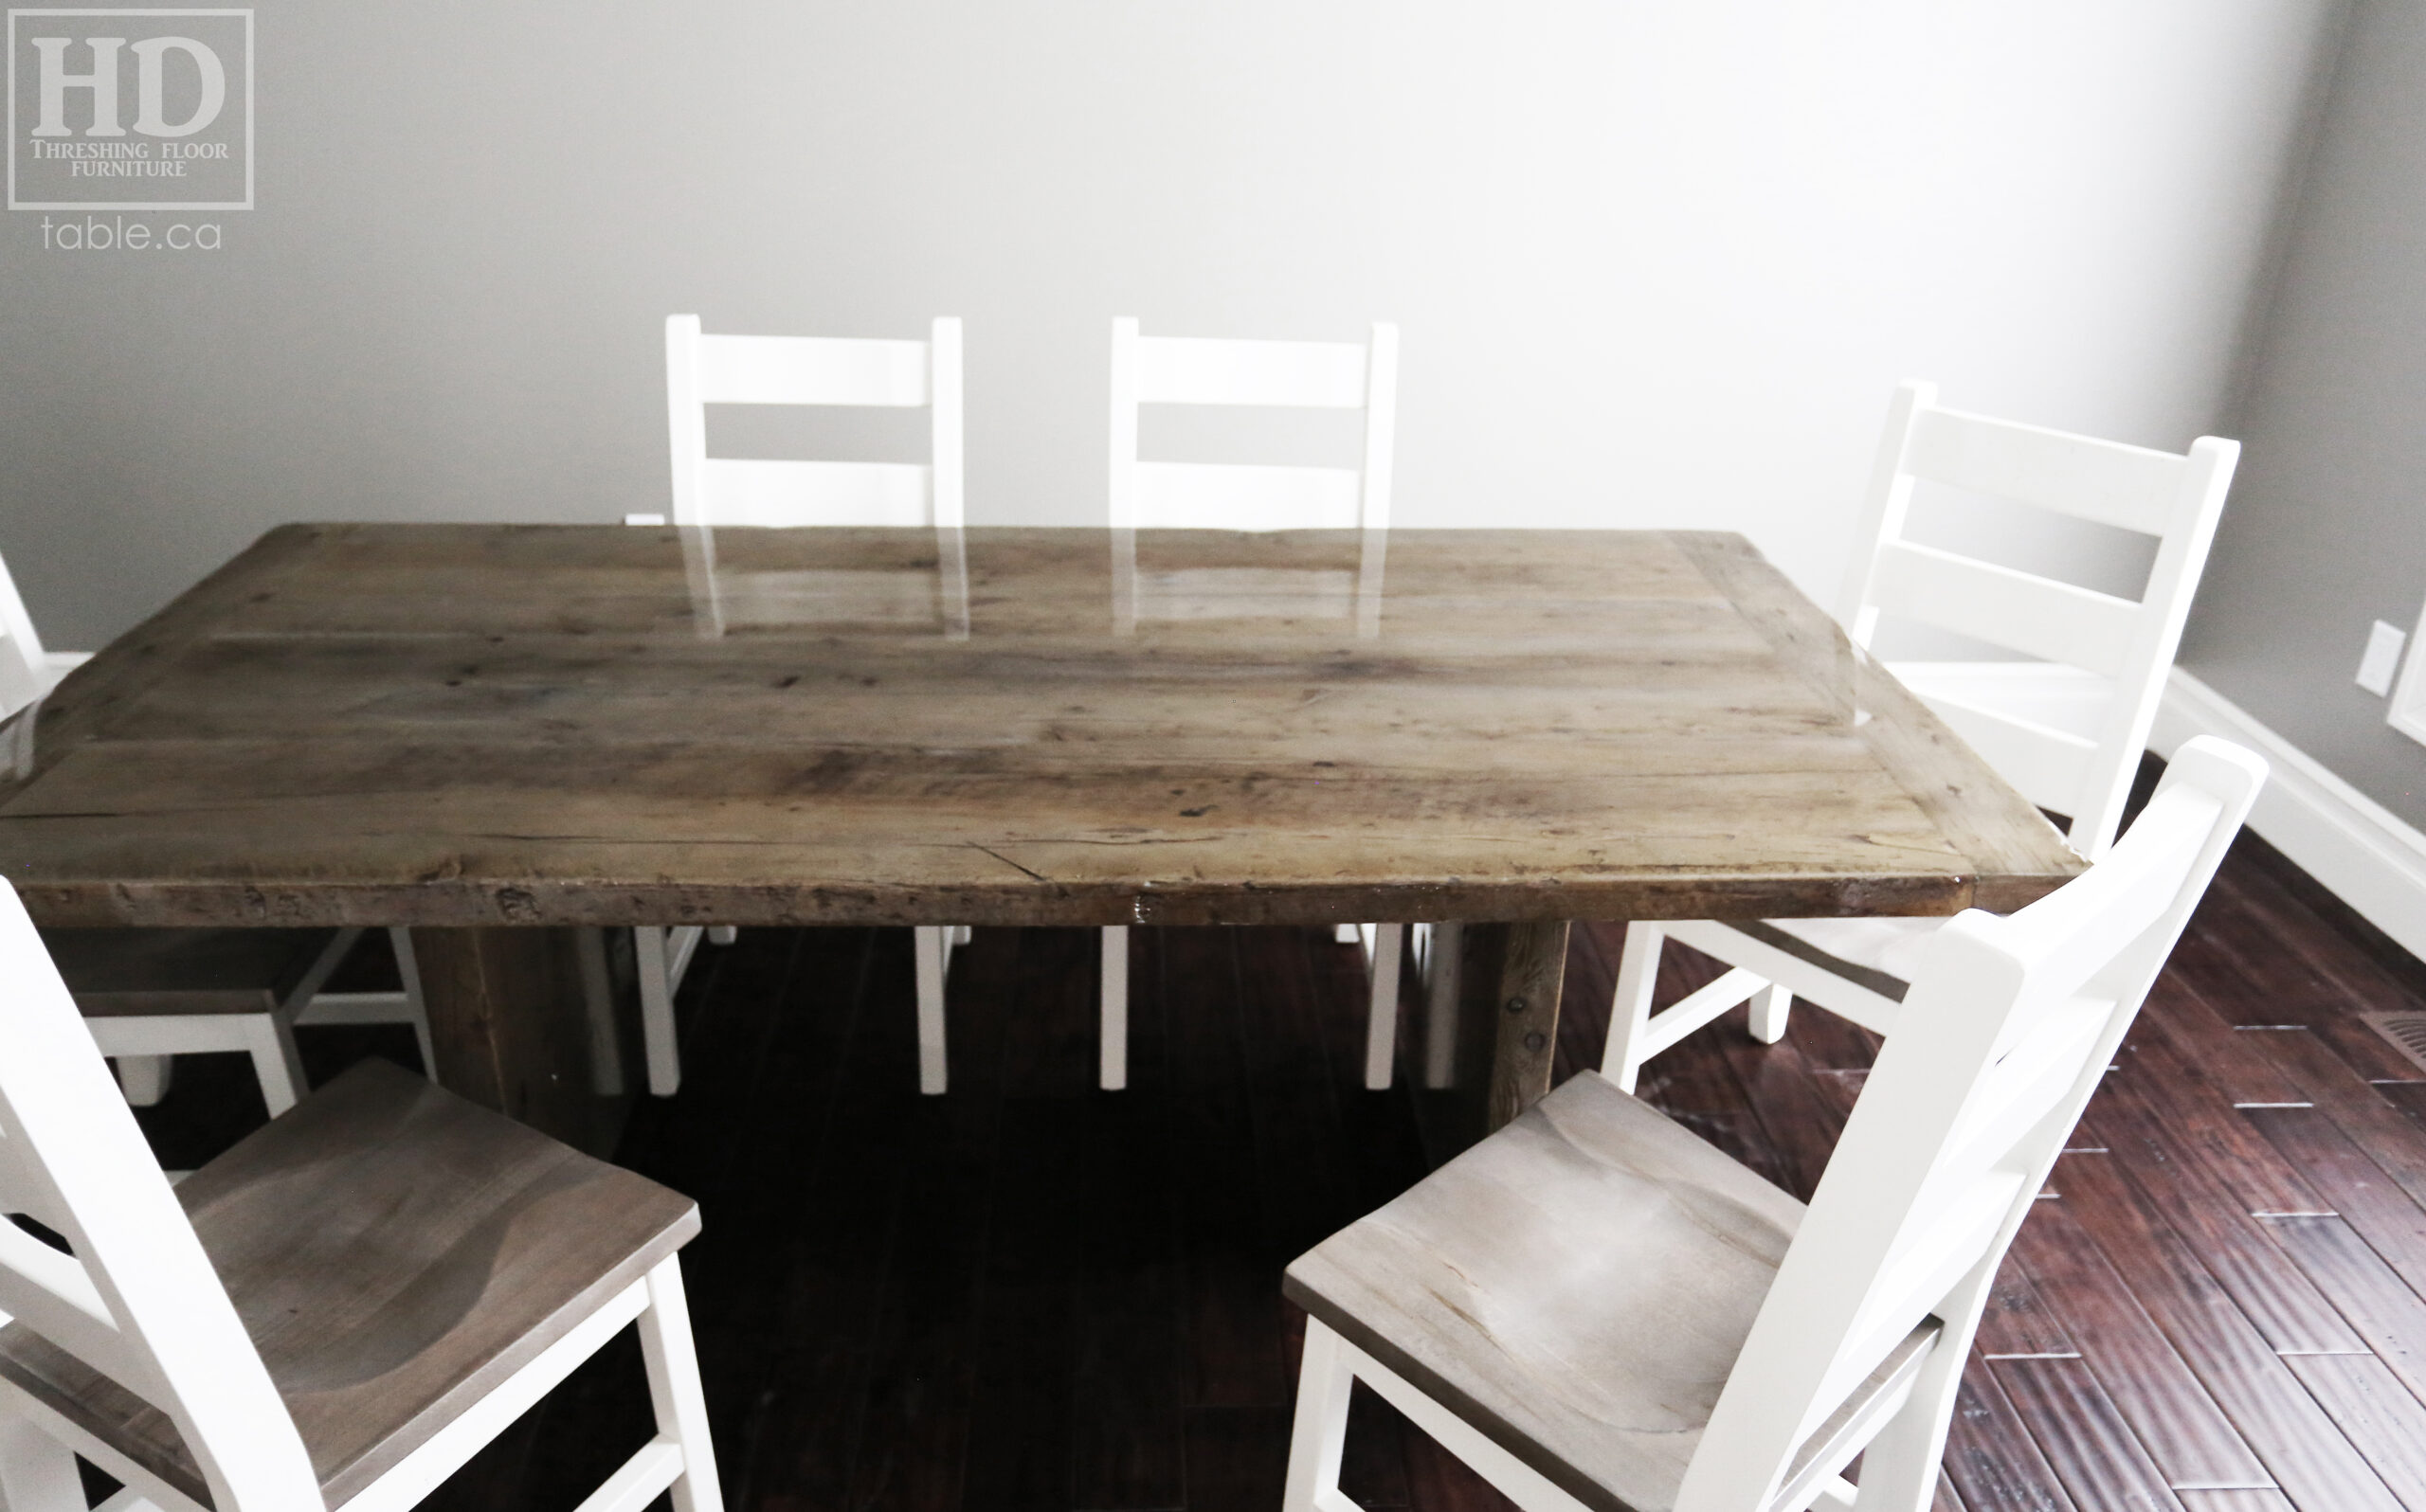 Barnwood Table with Barnboard Treatment Option by HD Threshing Floor Furniture / www.table.ca